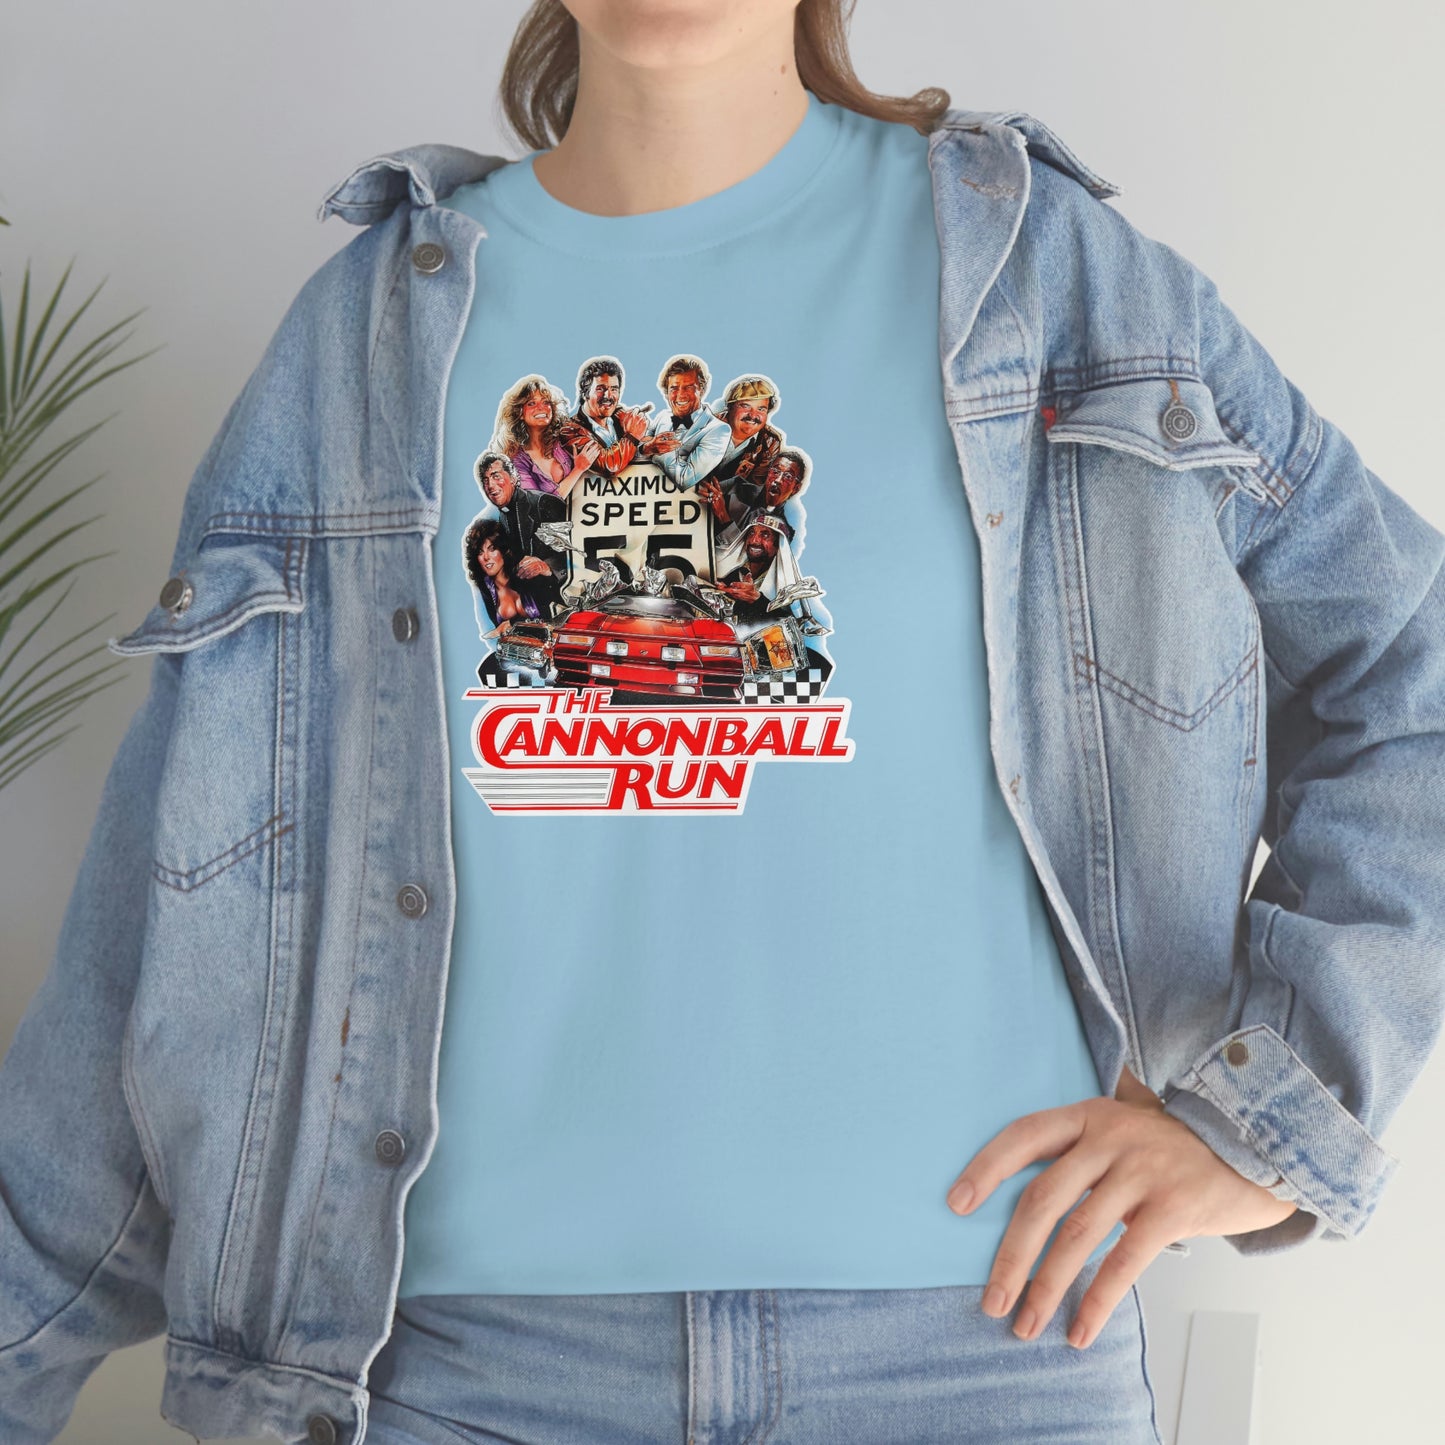 The Cannonball Run T-Shirt